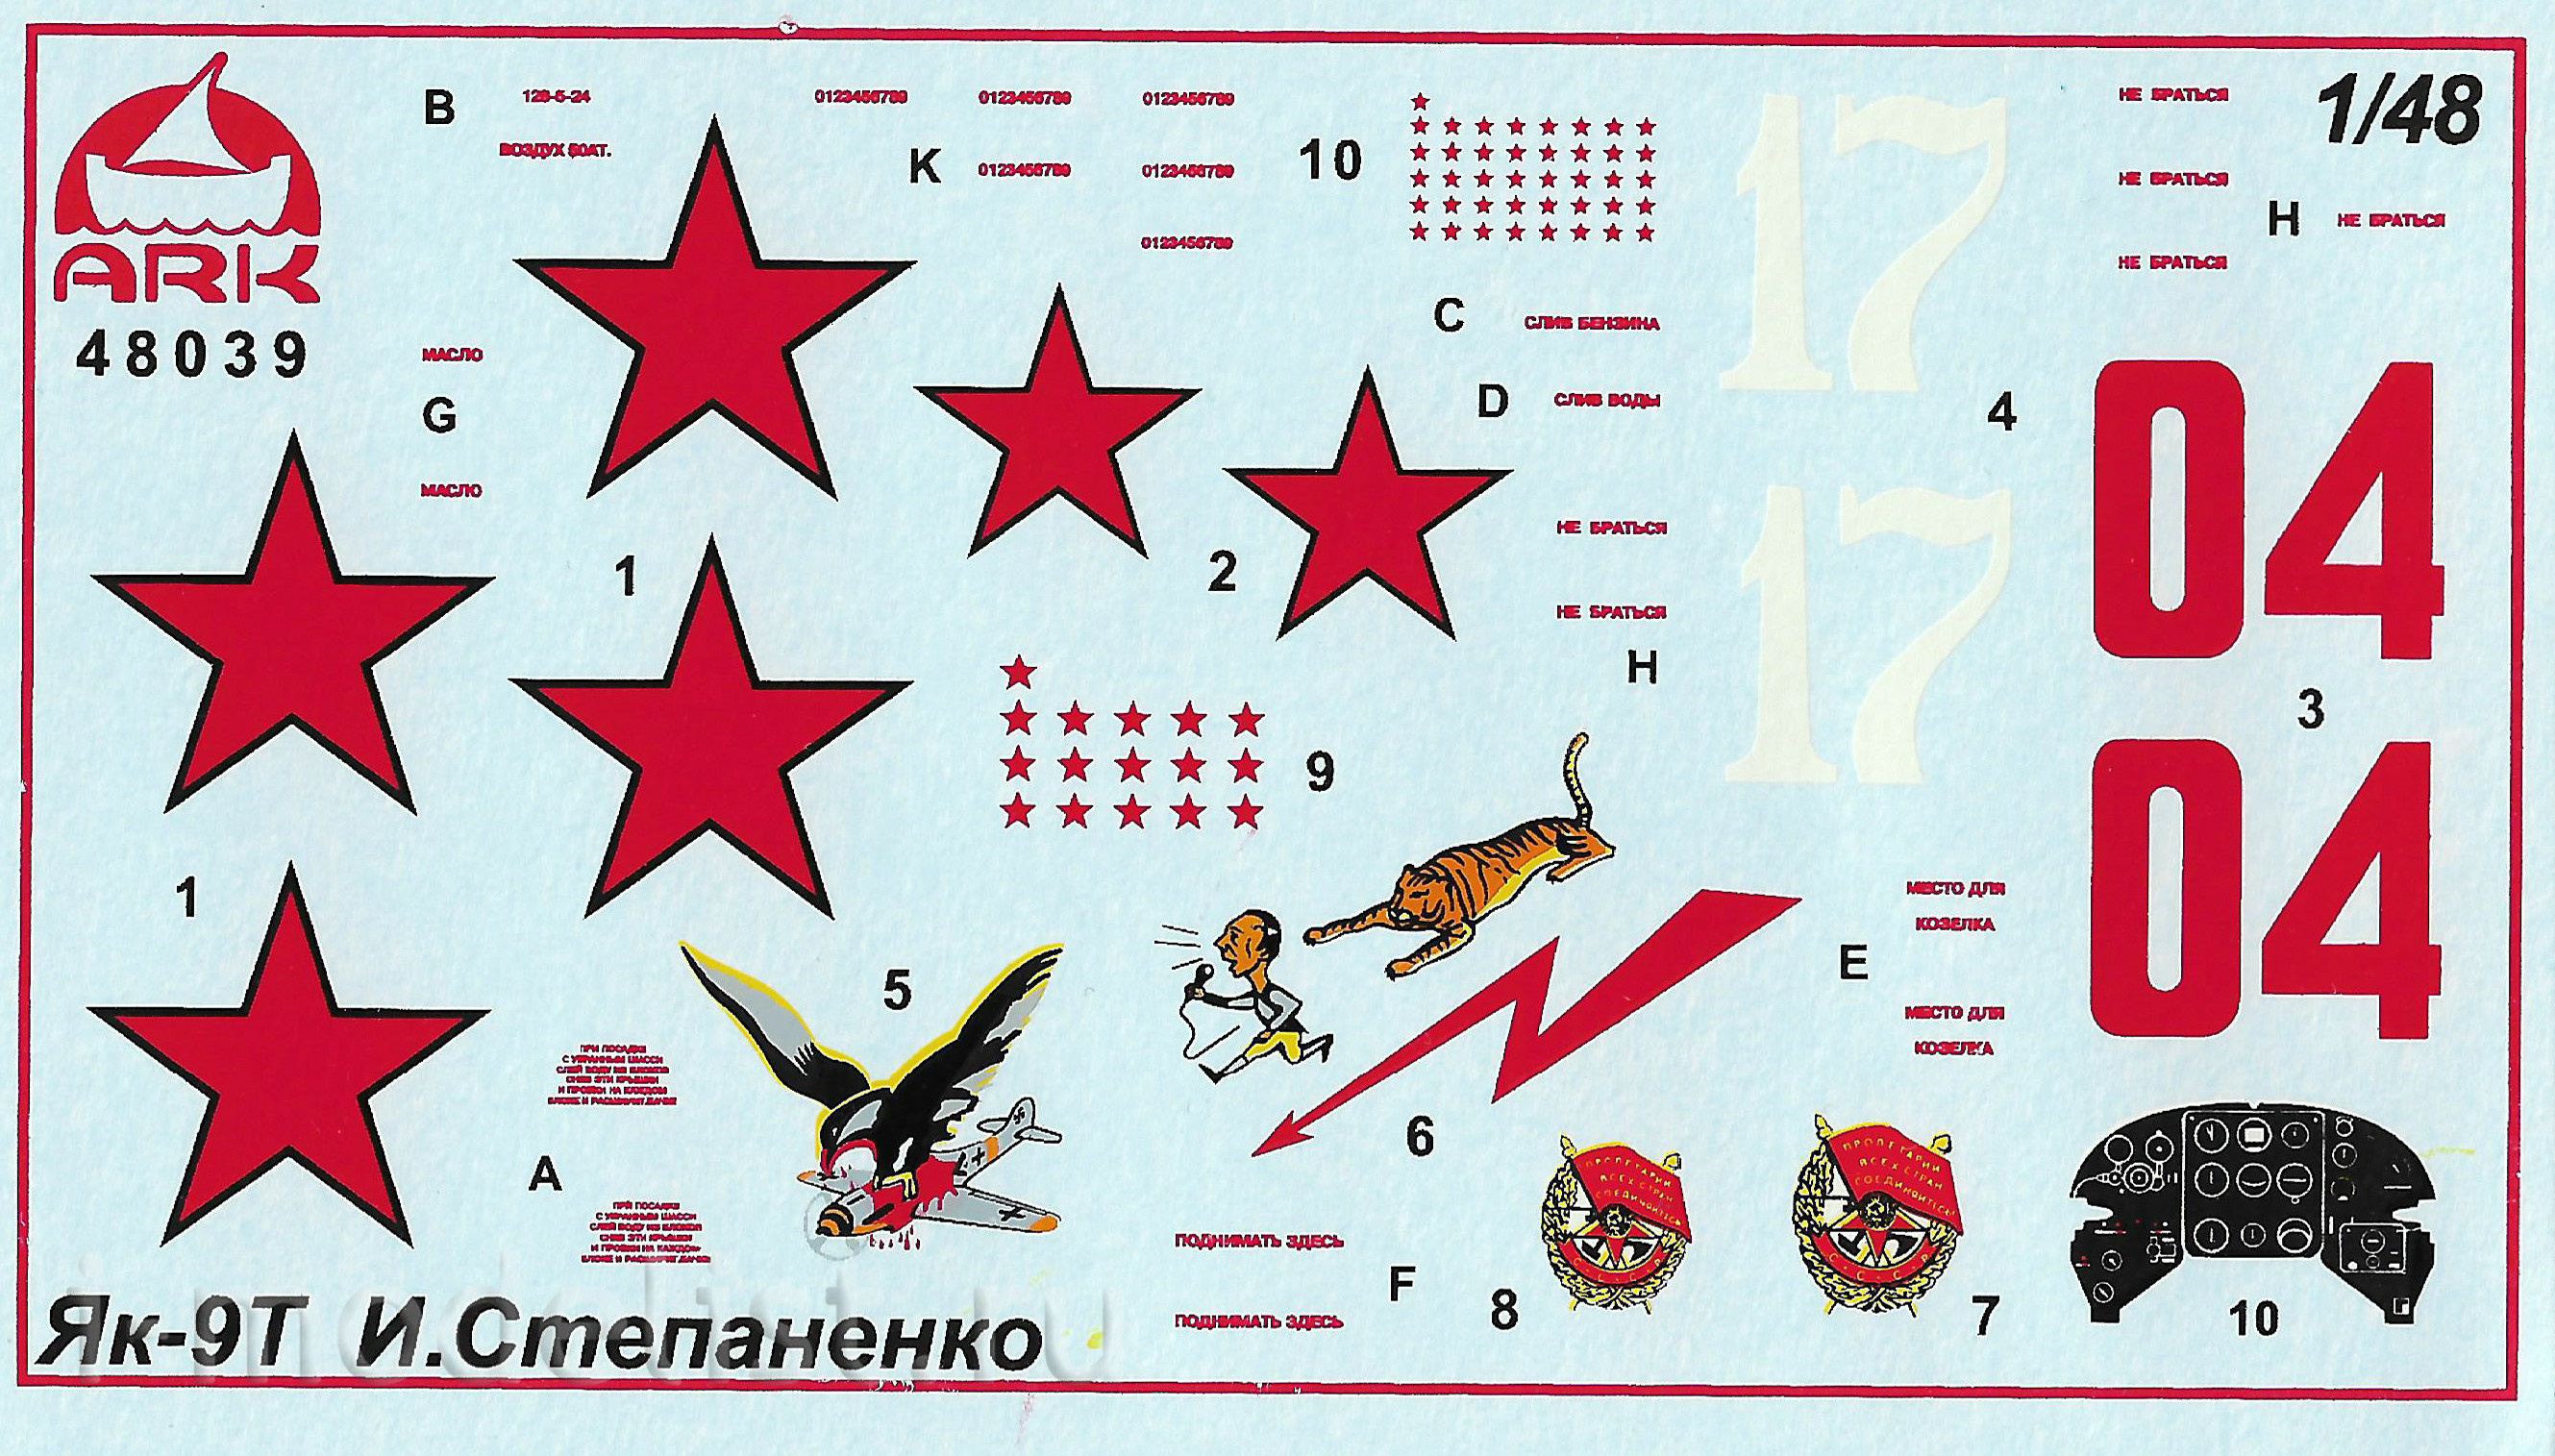 48039 ARK-models 1/48 Истребитель Як-9Т советского летчика-аса Ивана Степаненко